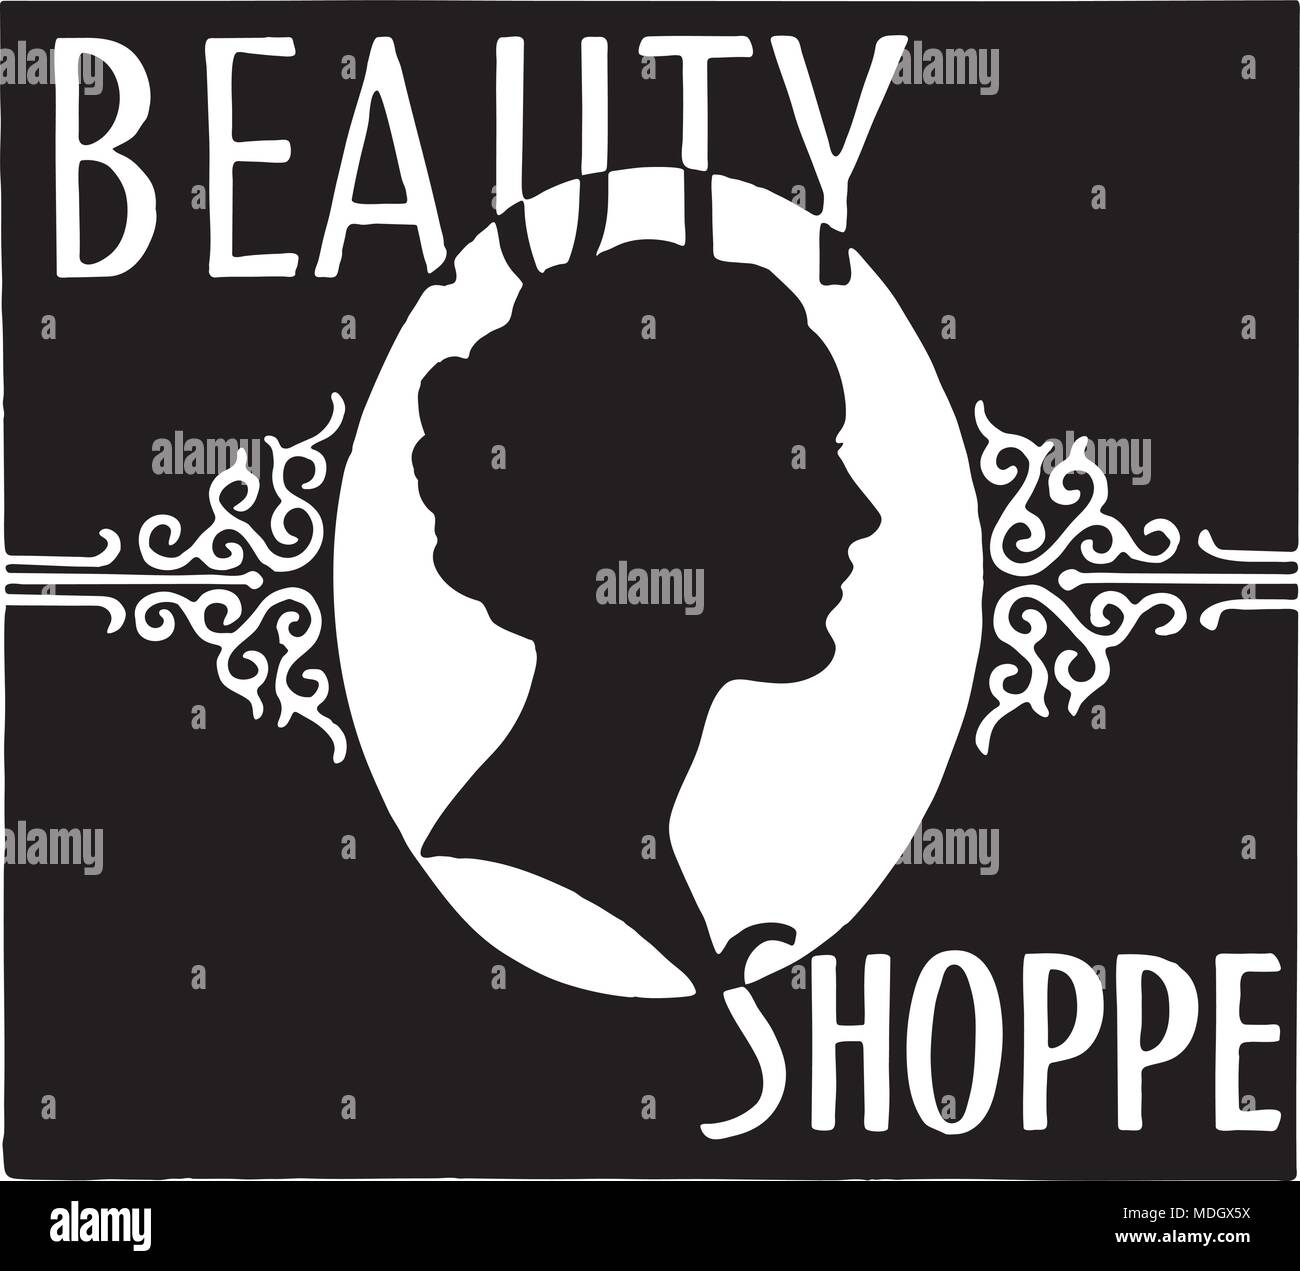 Beauty Shoppe - Retro Ad Art Banner Stock Vector